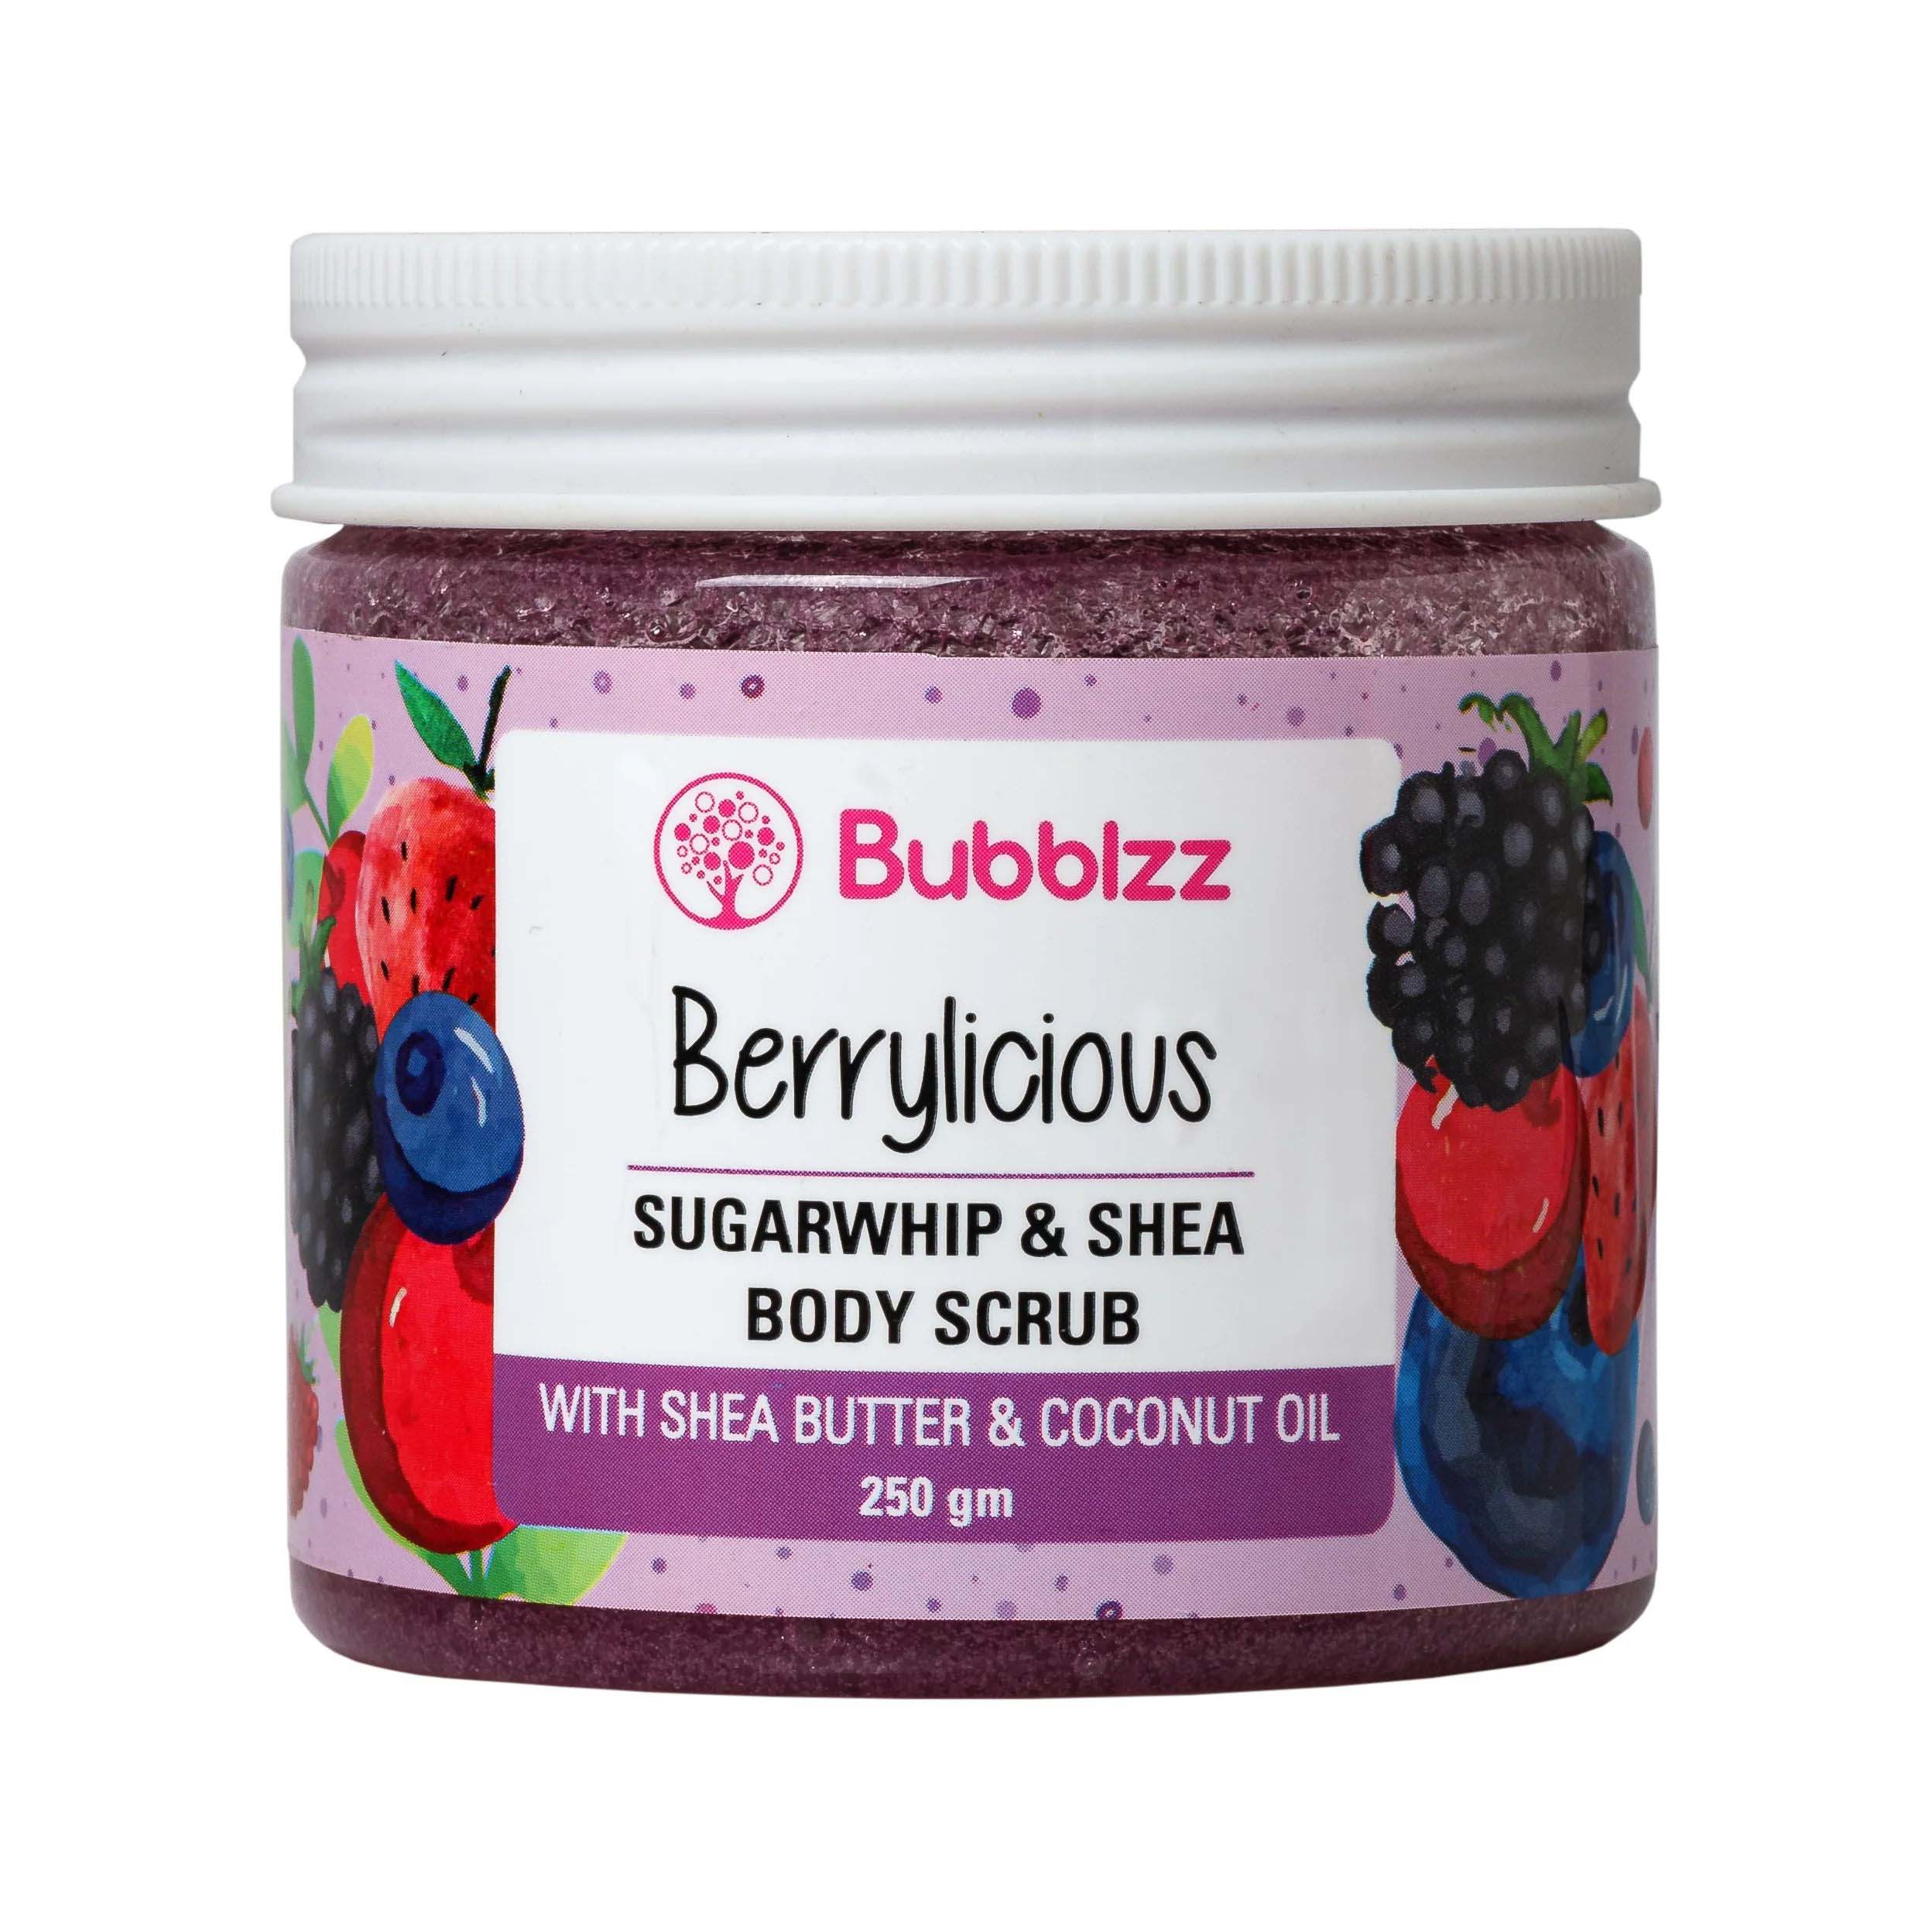 Bubblzz Berrylicious Sugar Whip & Shea Body Scrub – 250gm